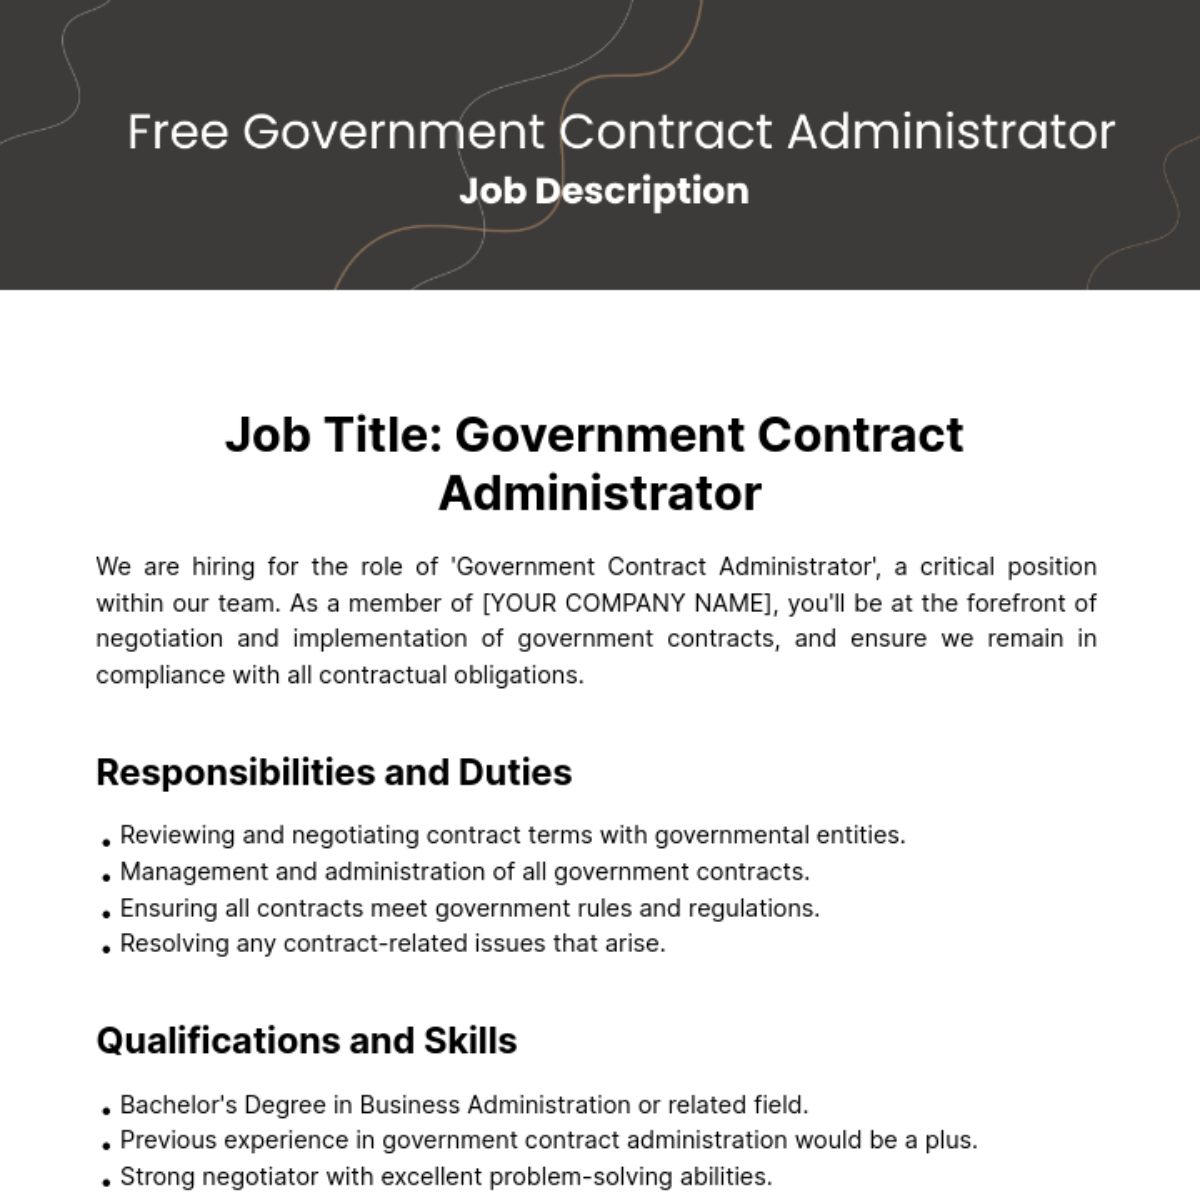 Government Contract Administrator Job Description Template